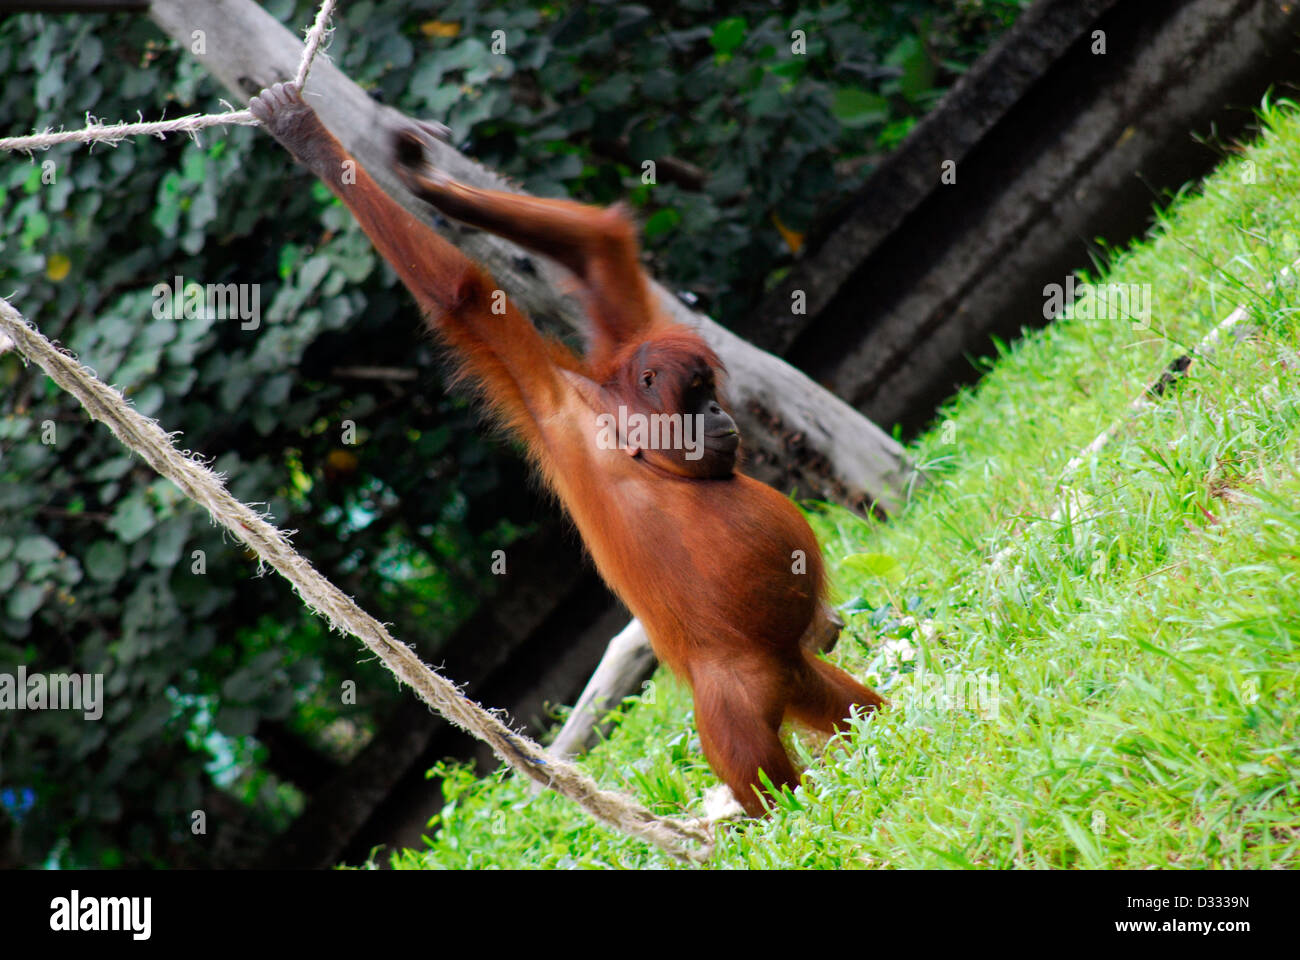 orangutang swinging from a rope Stock Photo